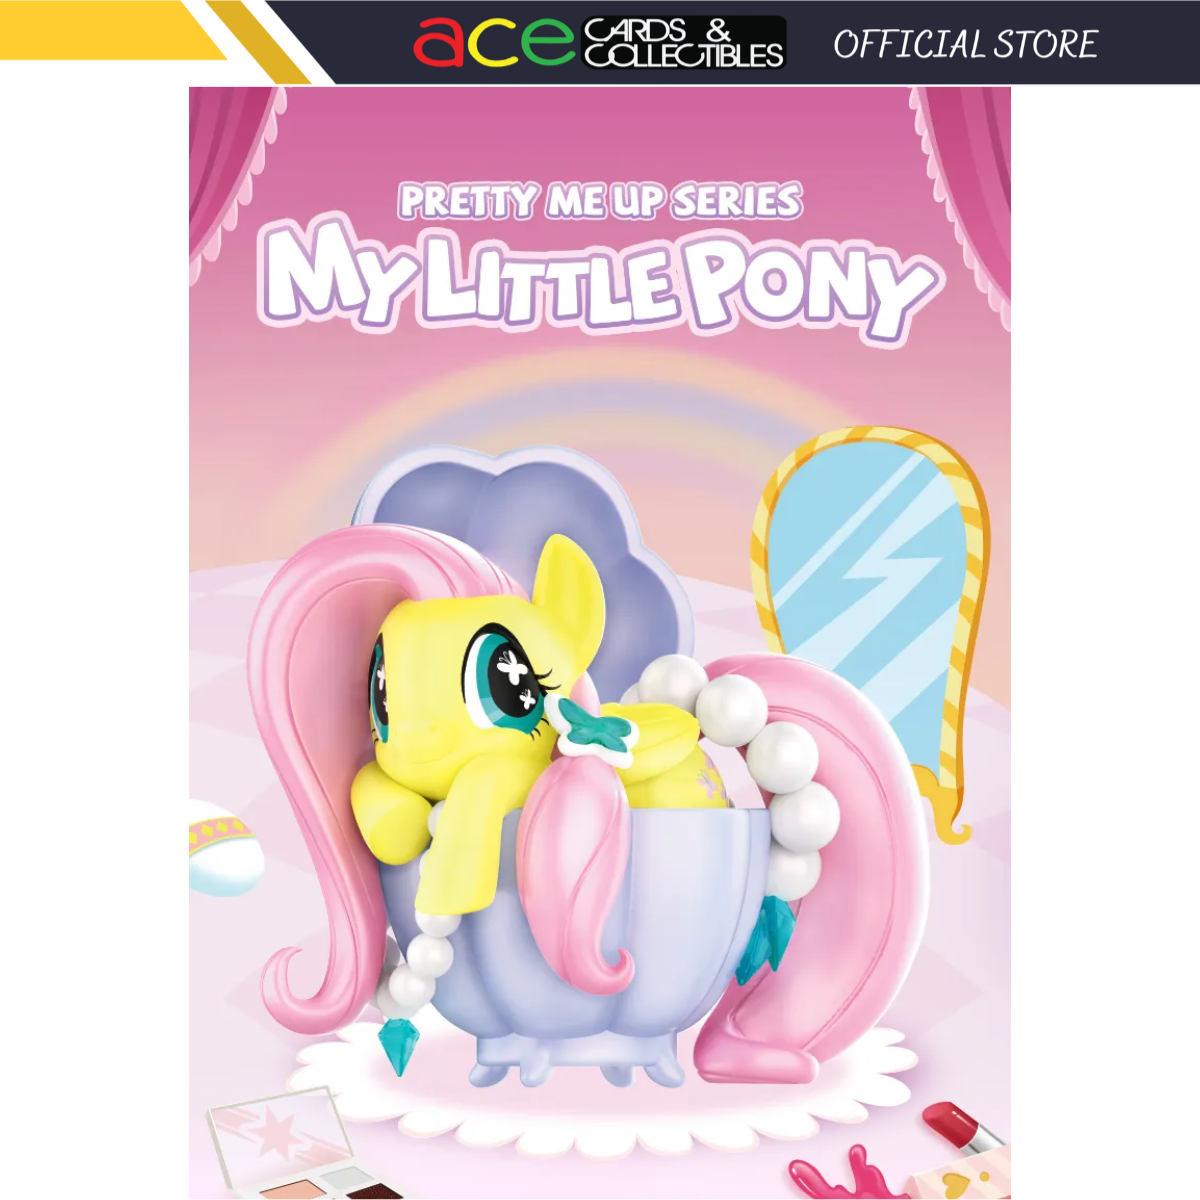 POP MART My Little Pony Pretty Me Up Series-Single Box (Random)-Pop Mart-Ace Cards & Collectibles